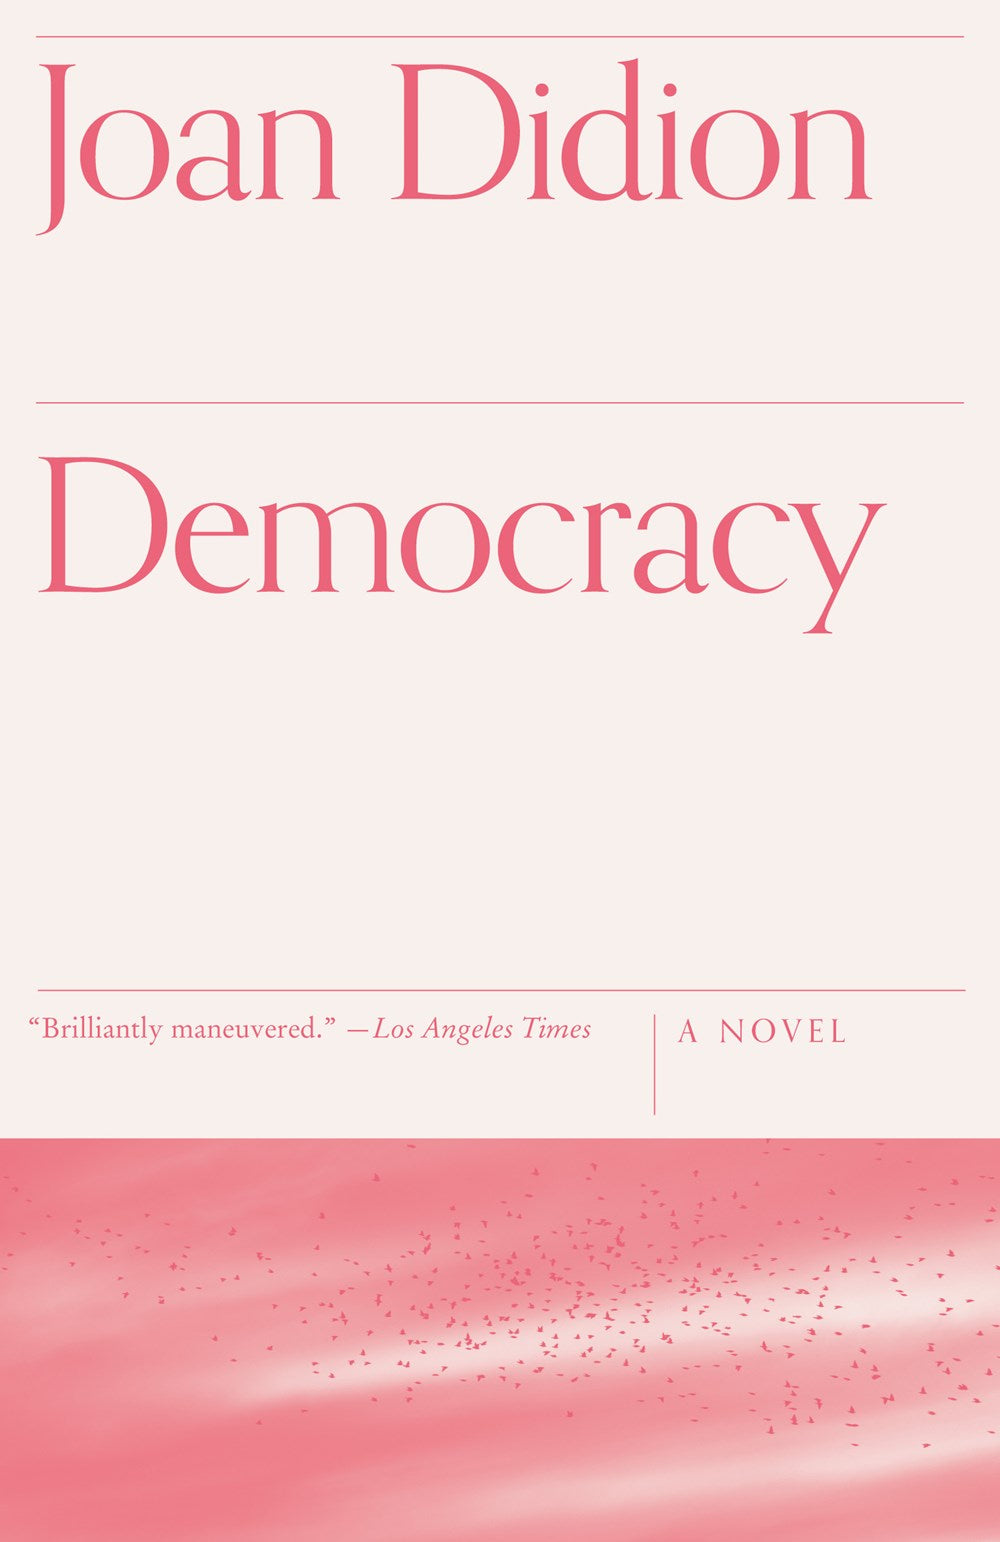 Democracy: A Novel by Joan Didion